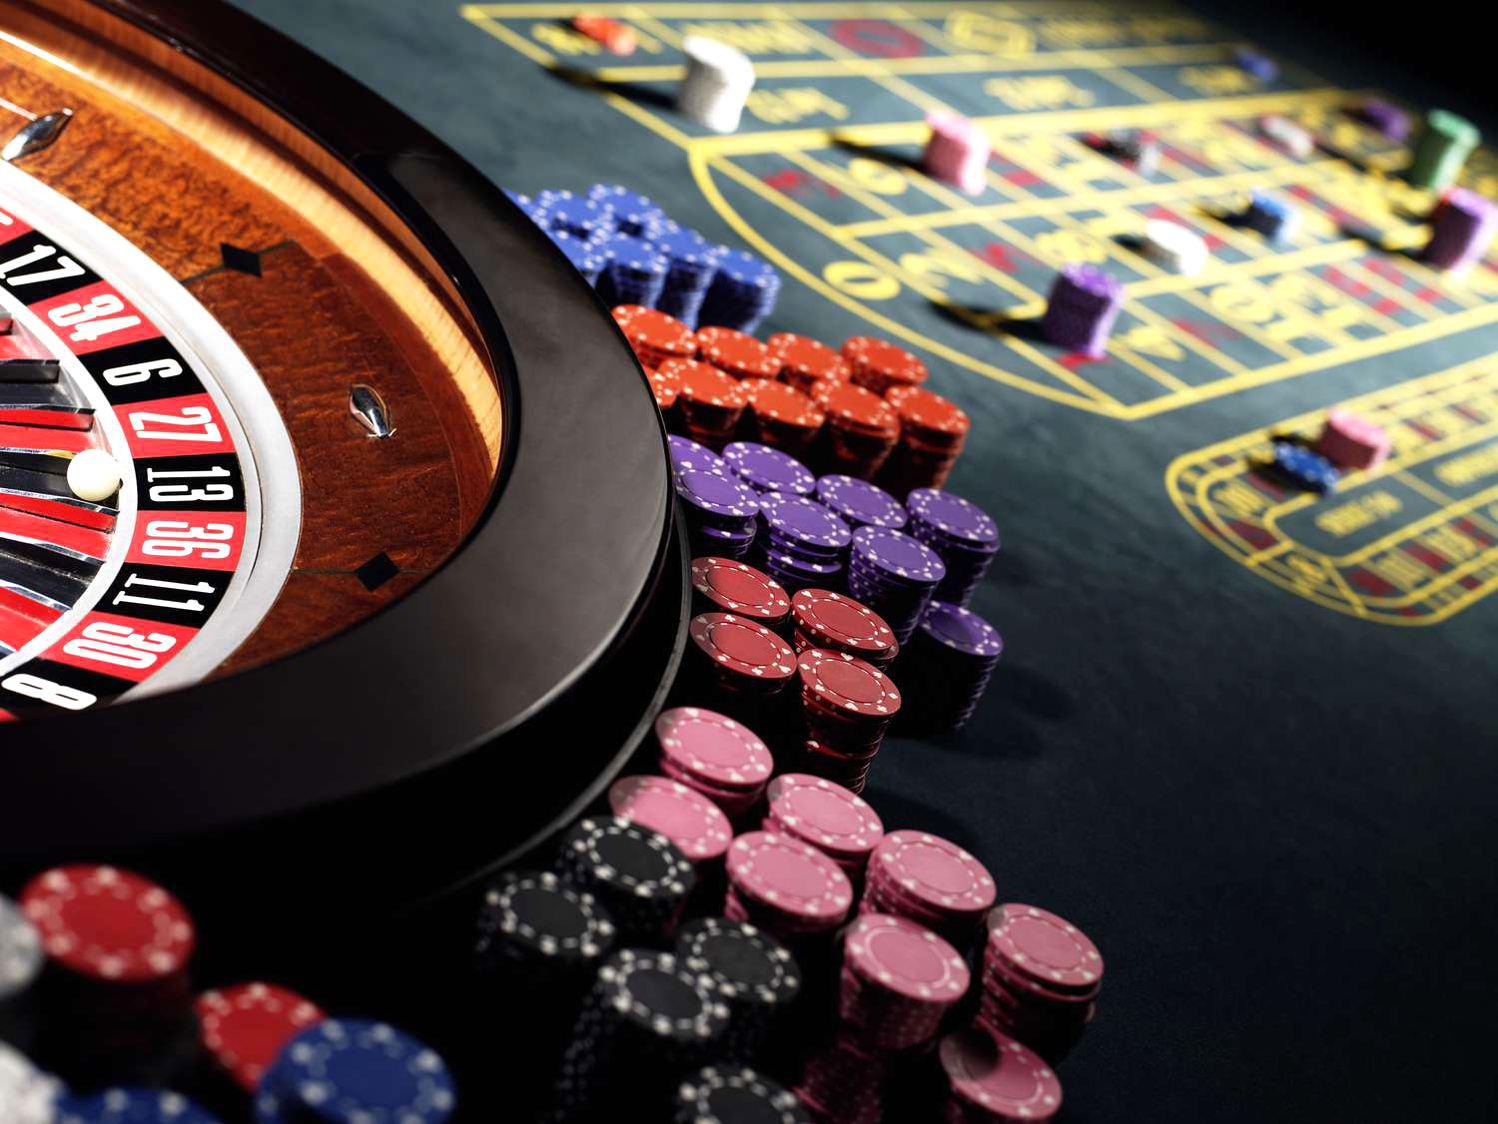 Macau – the gambling capital of the world